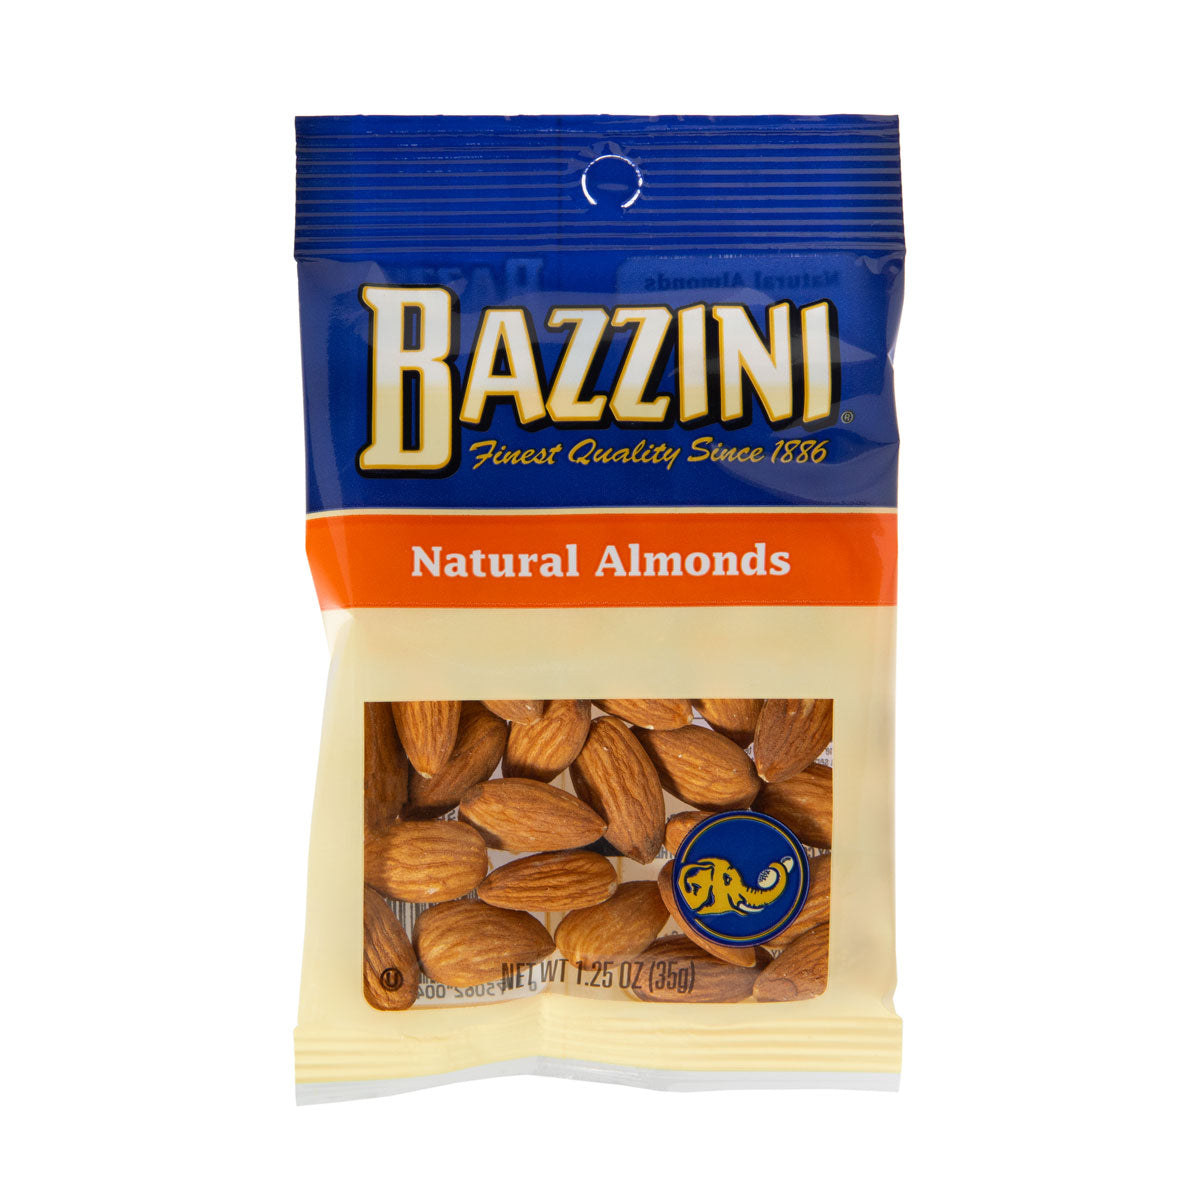 Bazzini Raw Almonds 1.25 oz